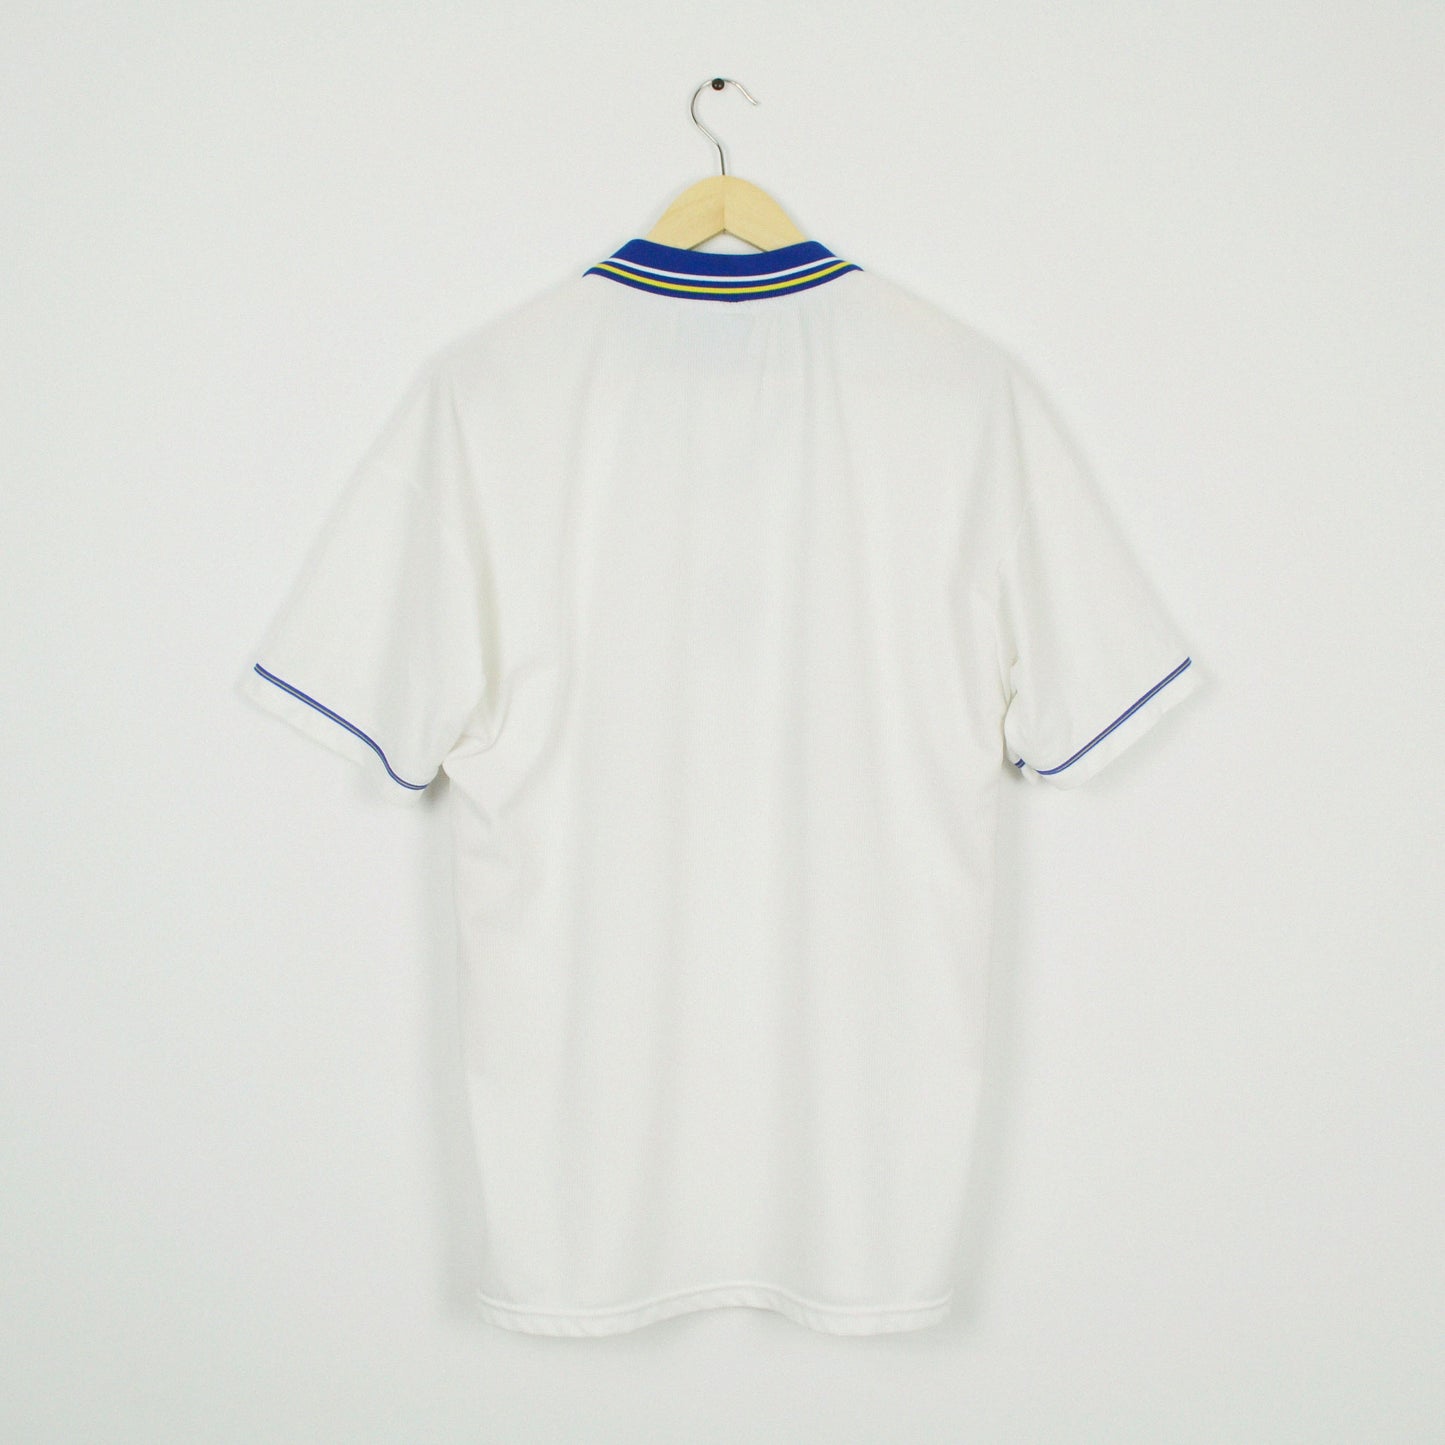 1998-00 Umbro Chelsea Away Shirt L